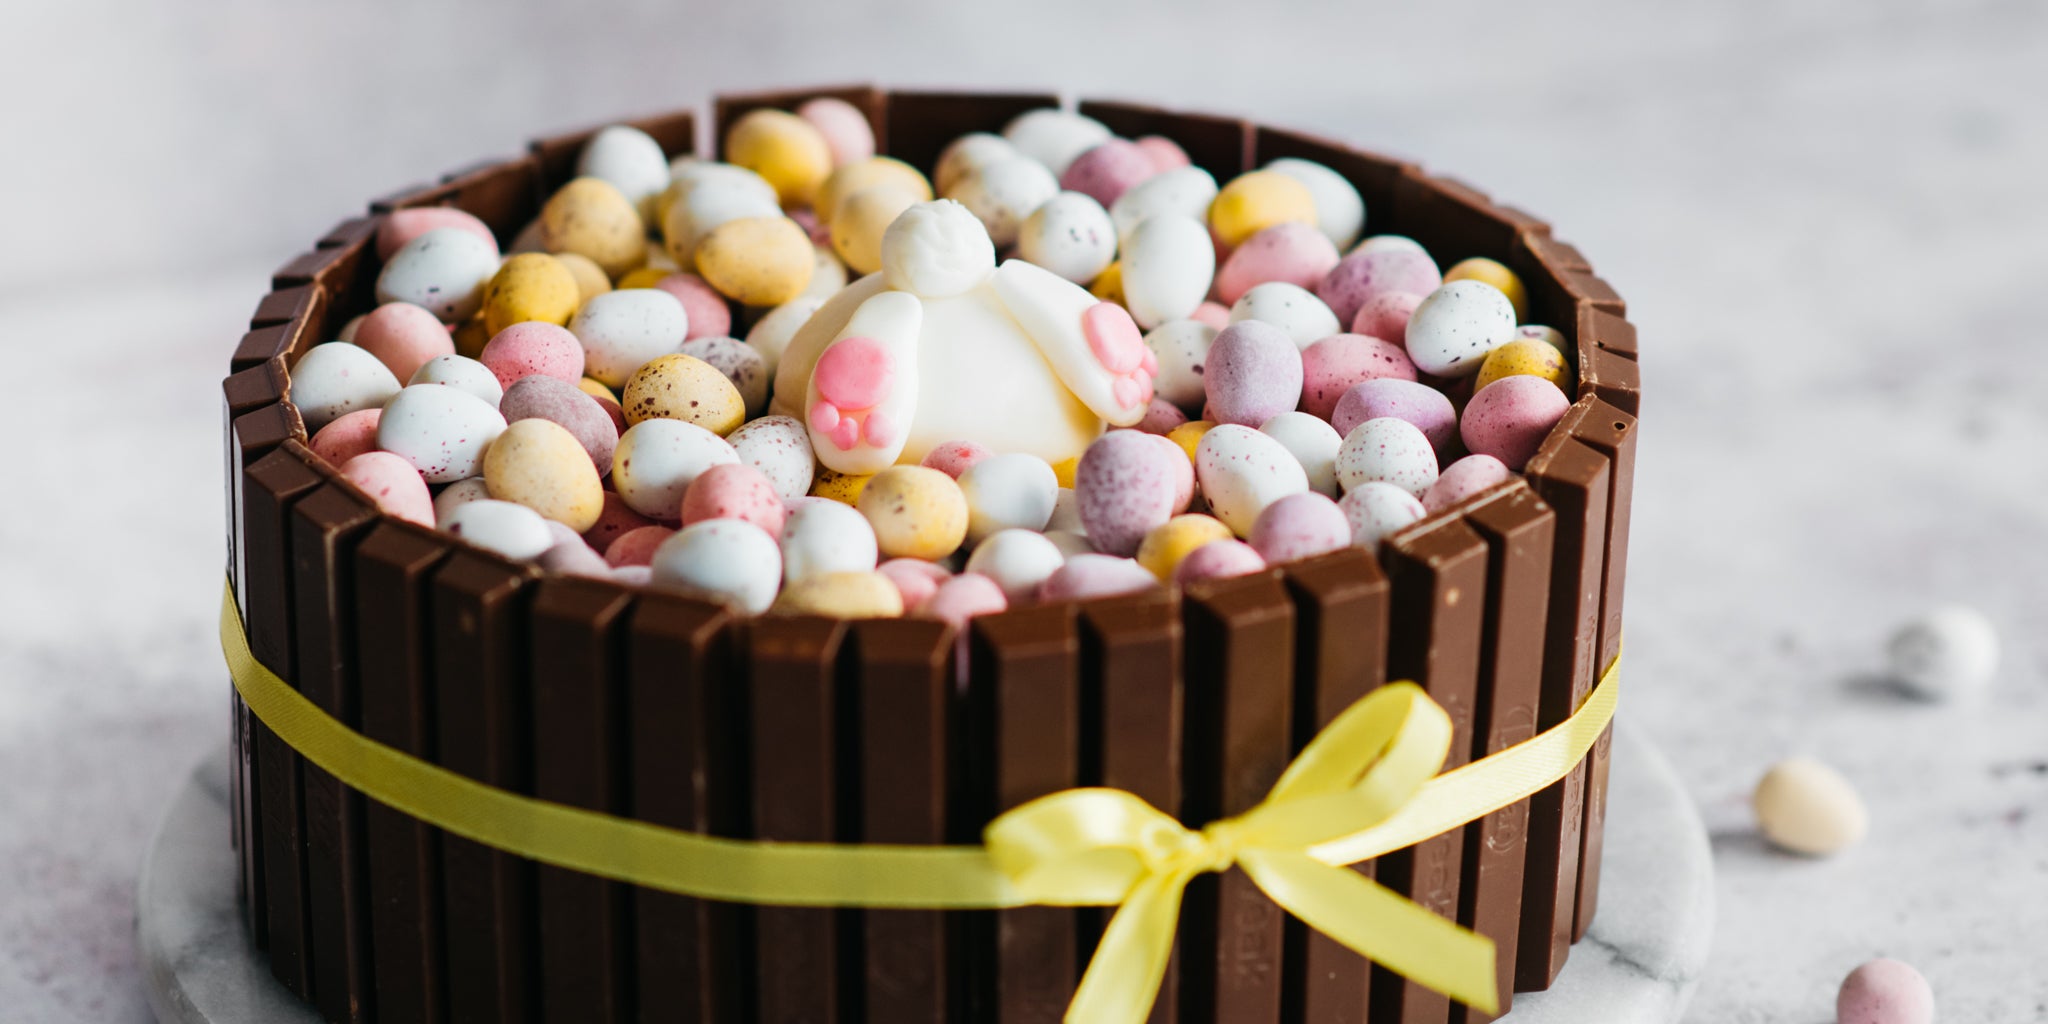 Easter Candy Cake | MrFood.com